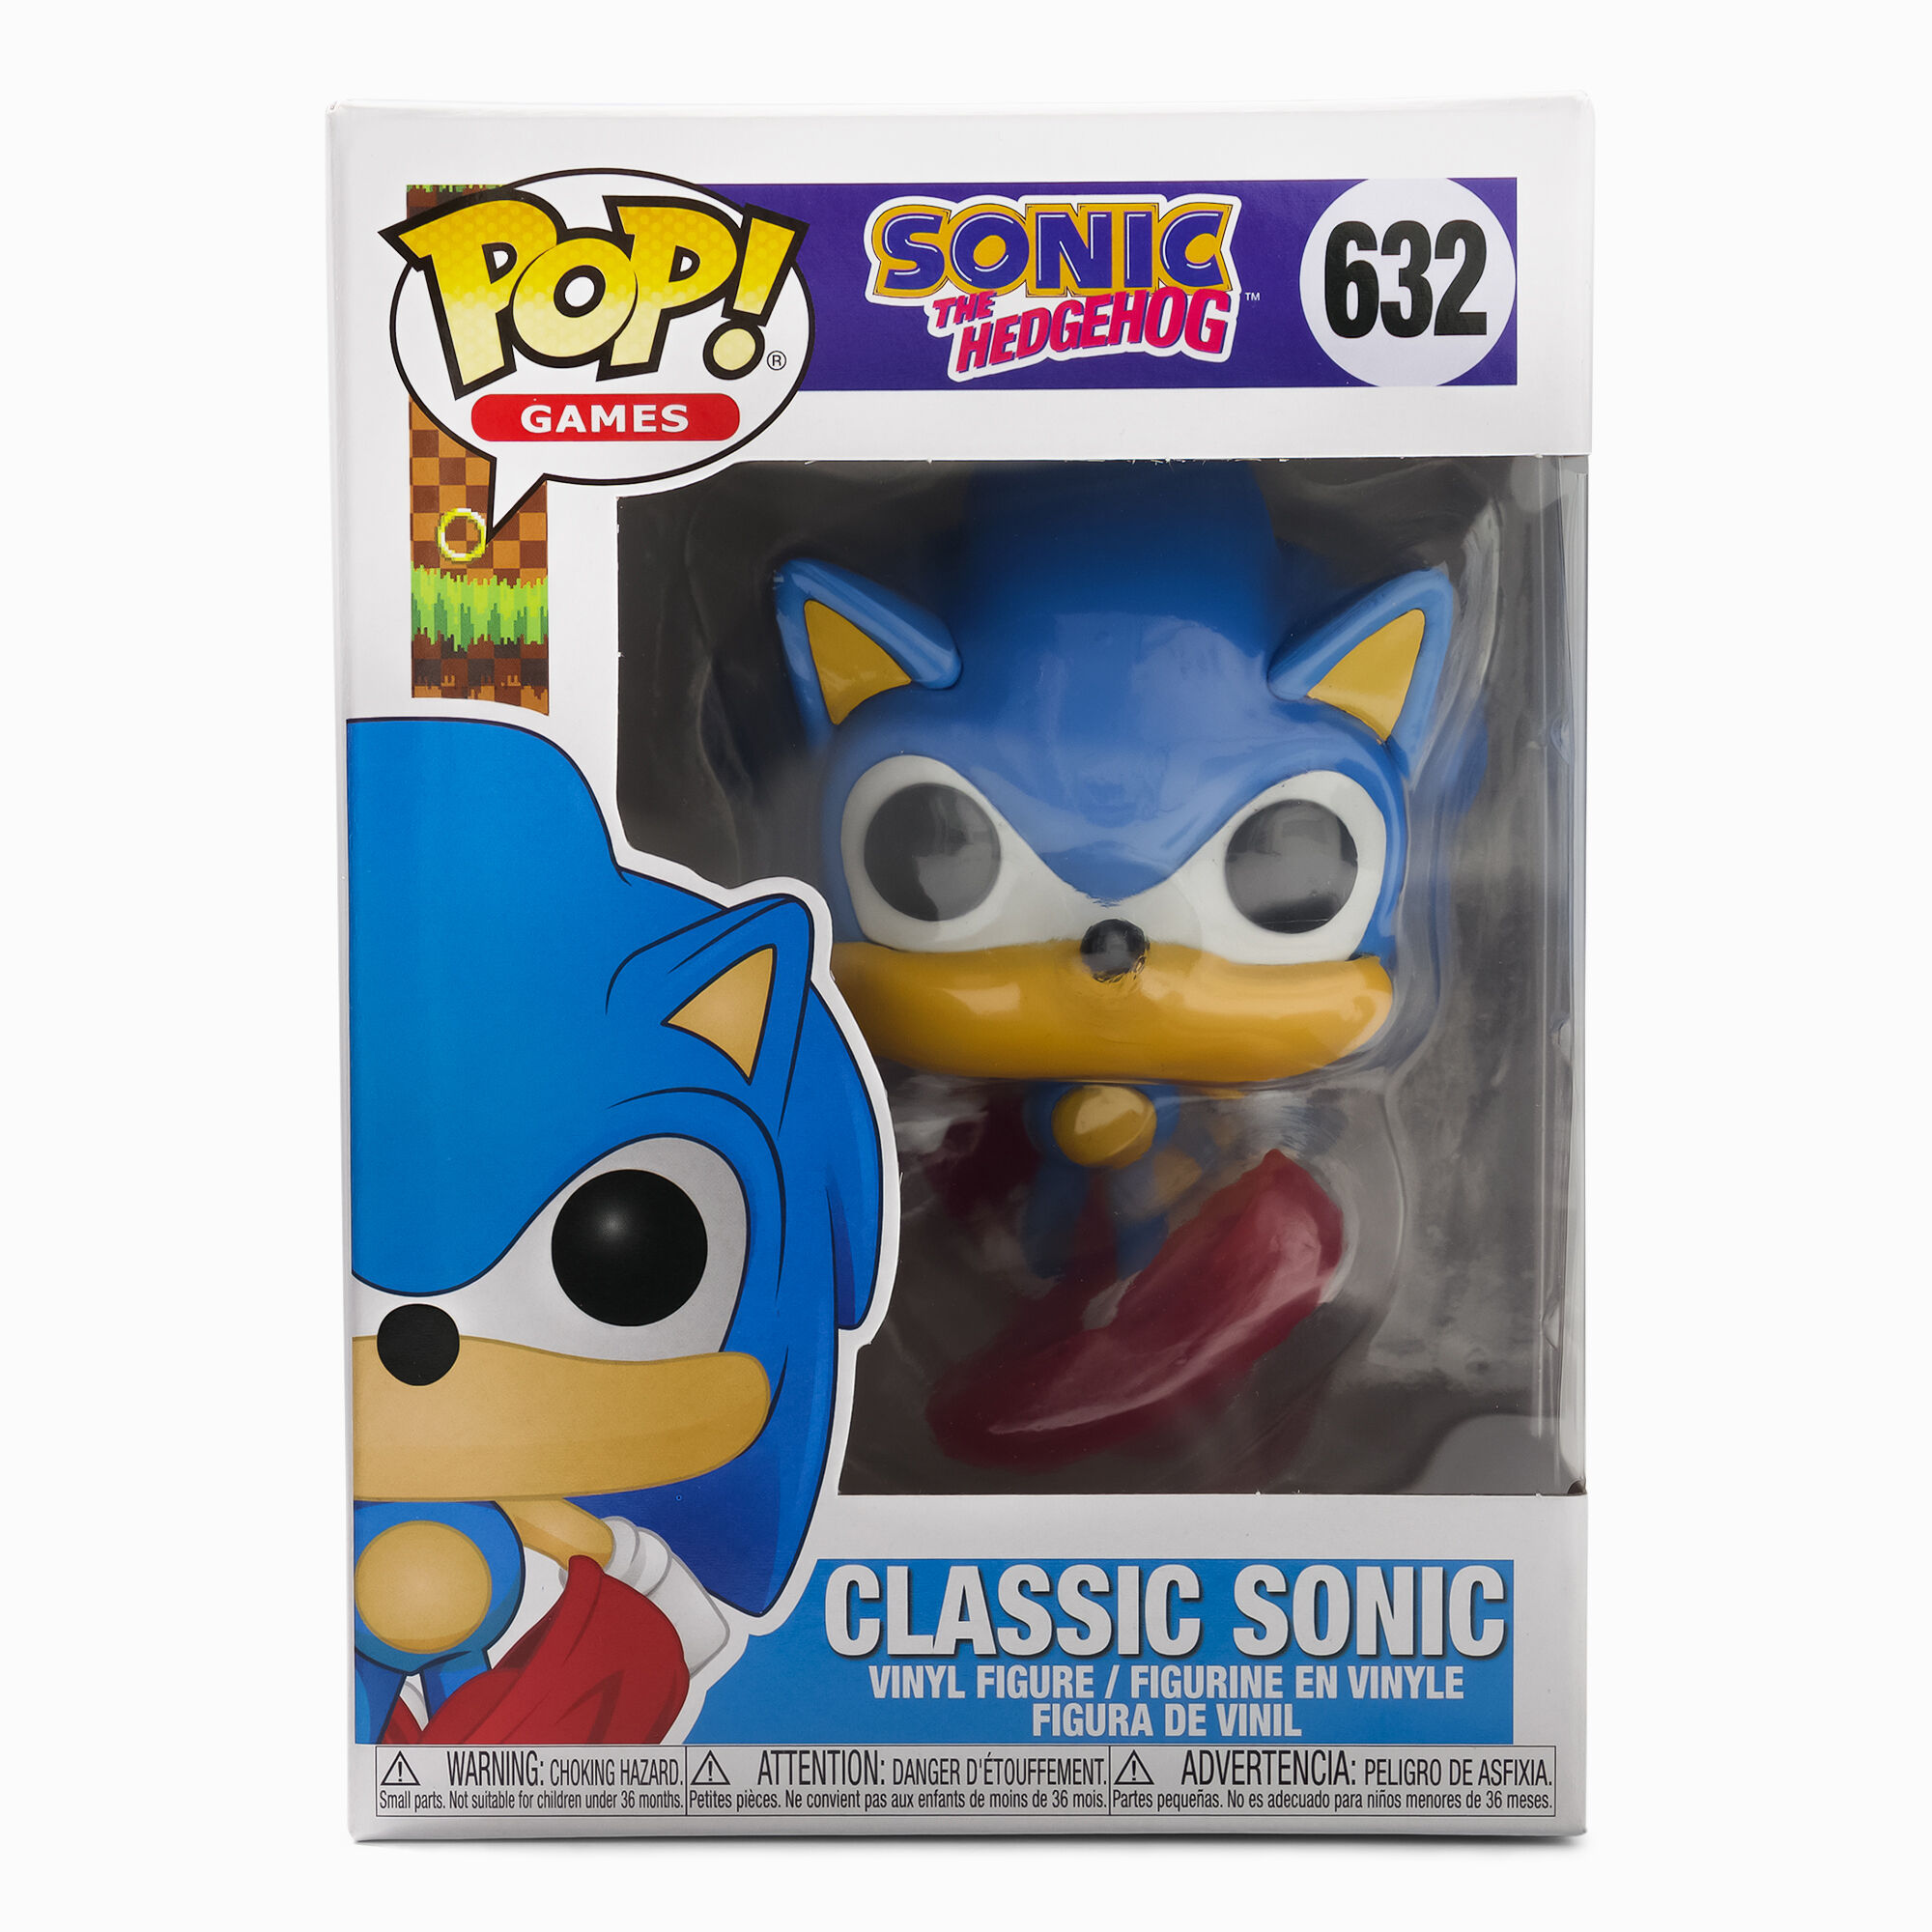 View Claires Pop Sonic Classic Sonic Vinyl Figure information